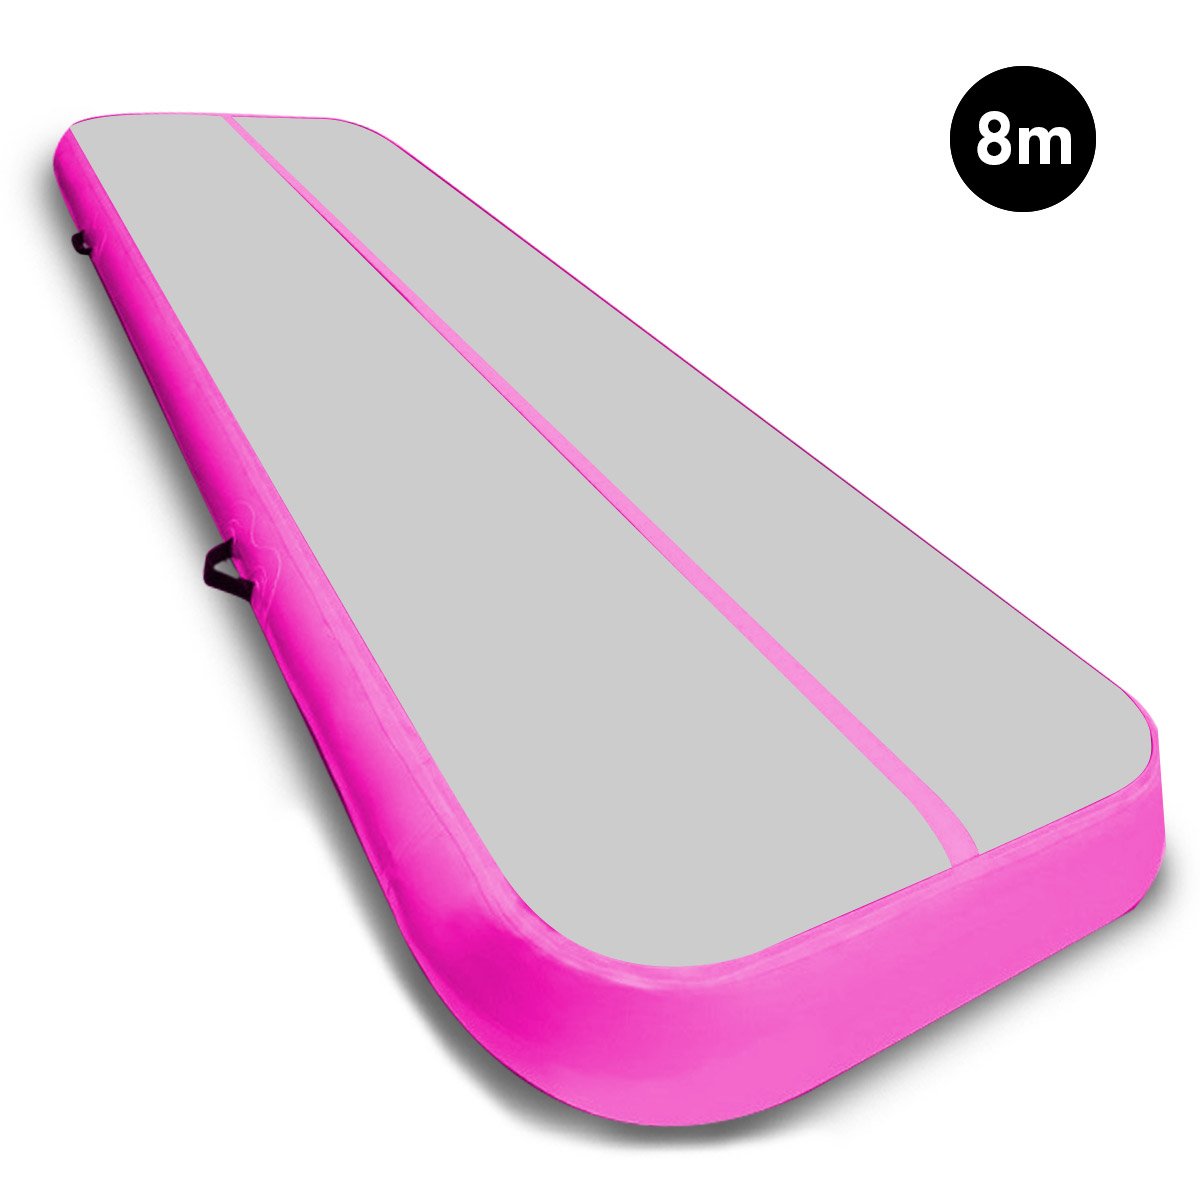 8m x 1m Air Track Inflatable Gymnastics Mat Tumbling - Grey Pink 1